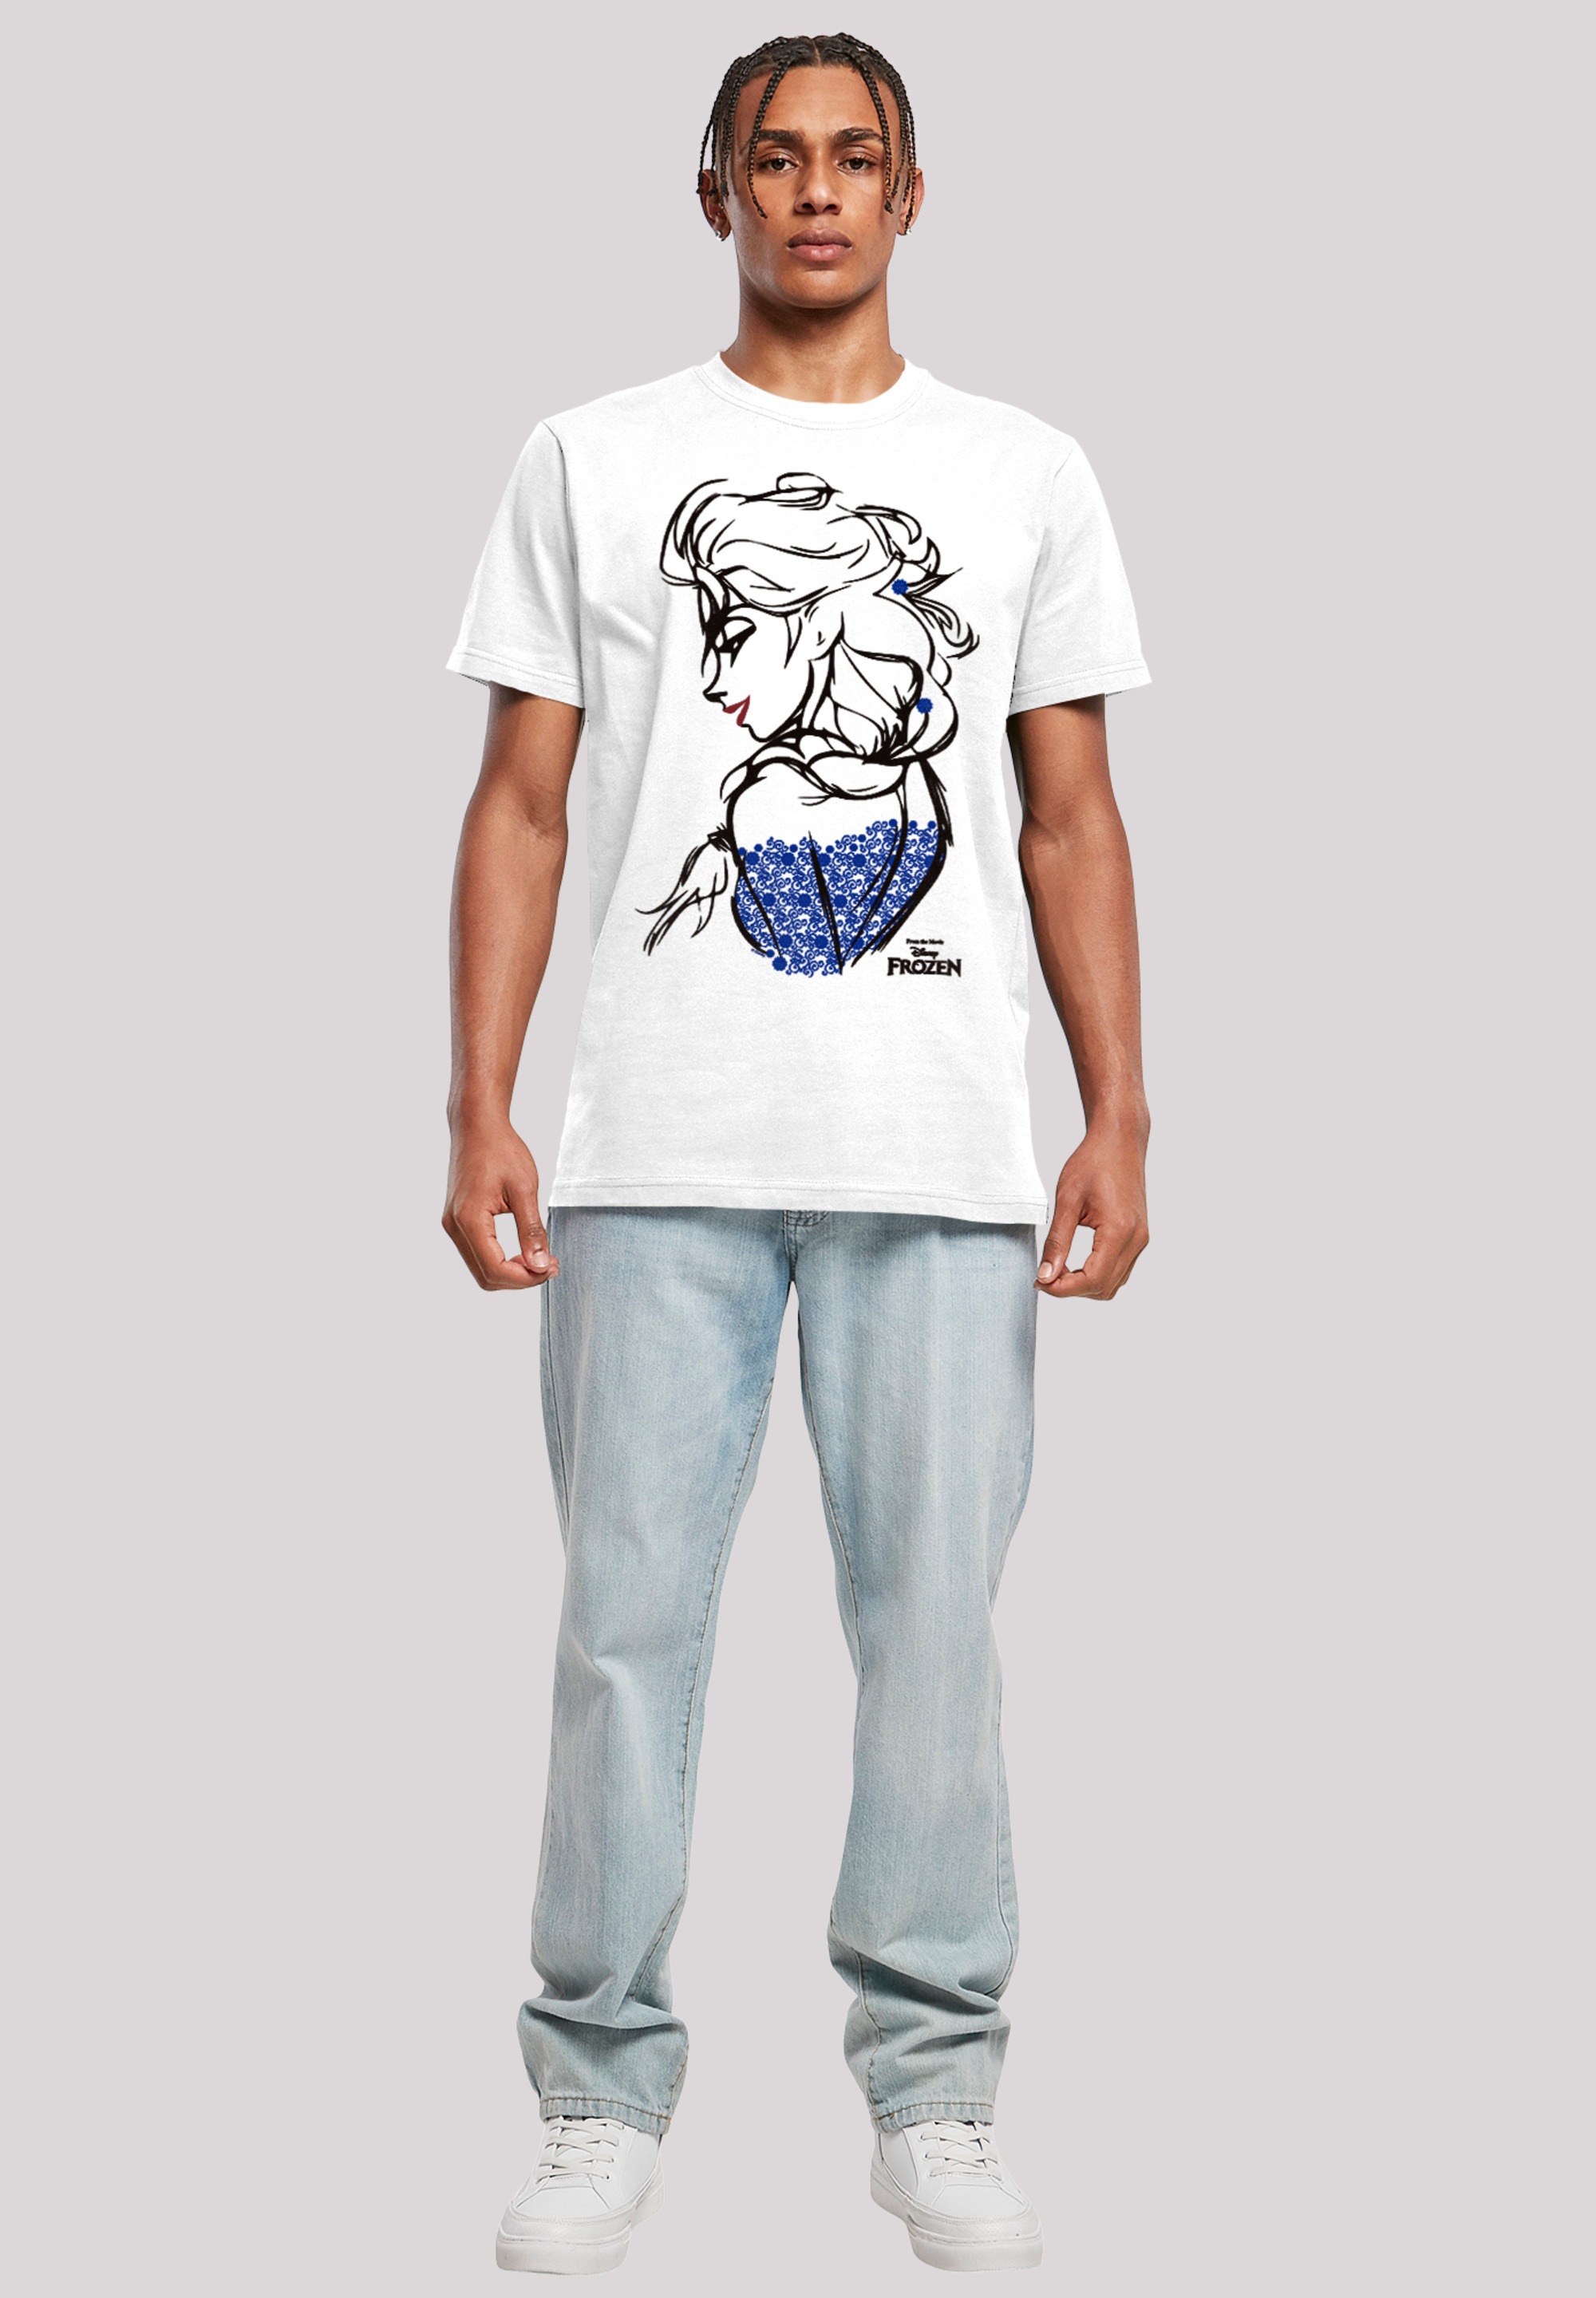 F4NT4STIC T-Shirt »Disney Frozen Elsa Sketch Mono«, Herren,Premium Merch,Regular-Fit,Basic,Bedruckt